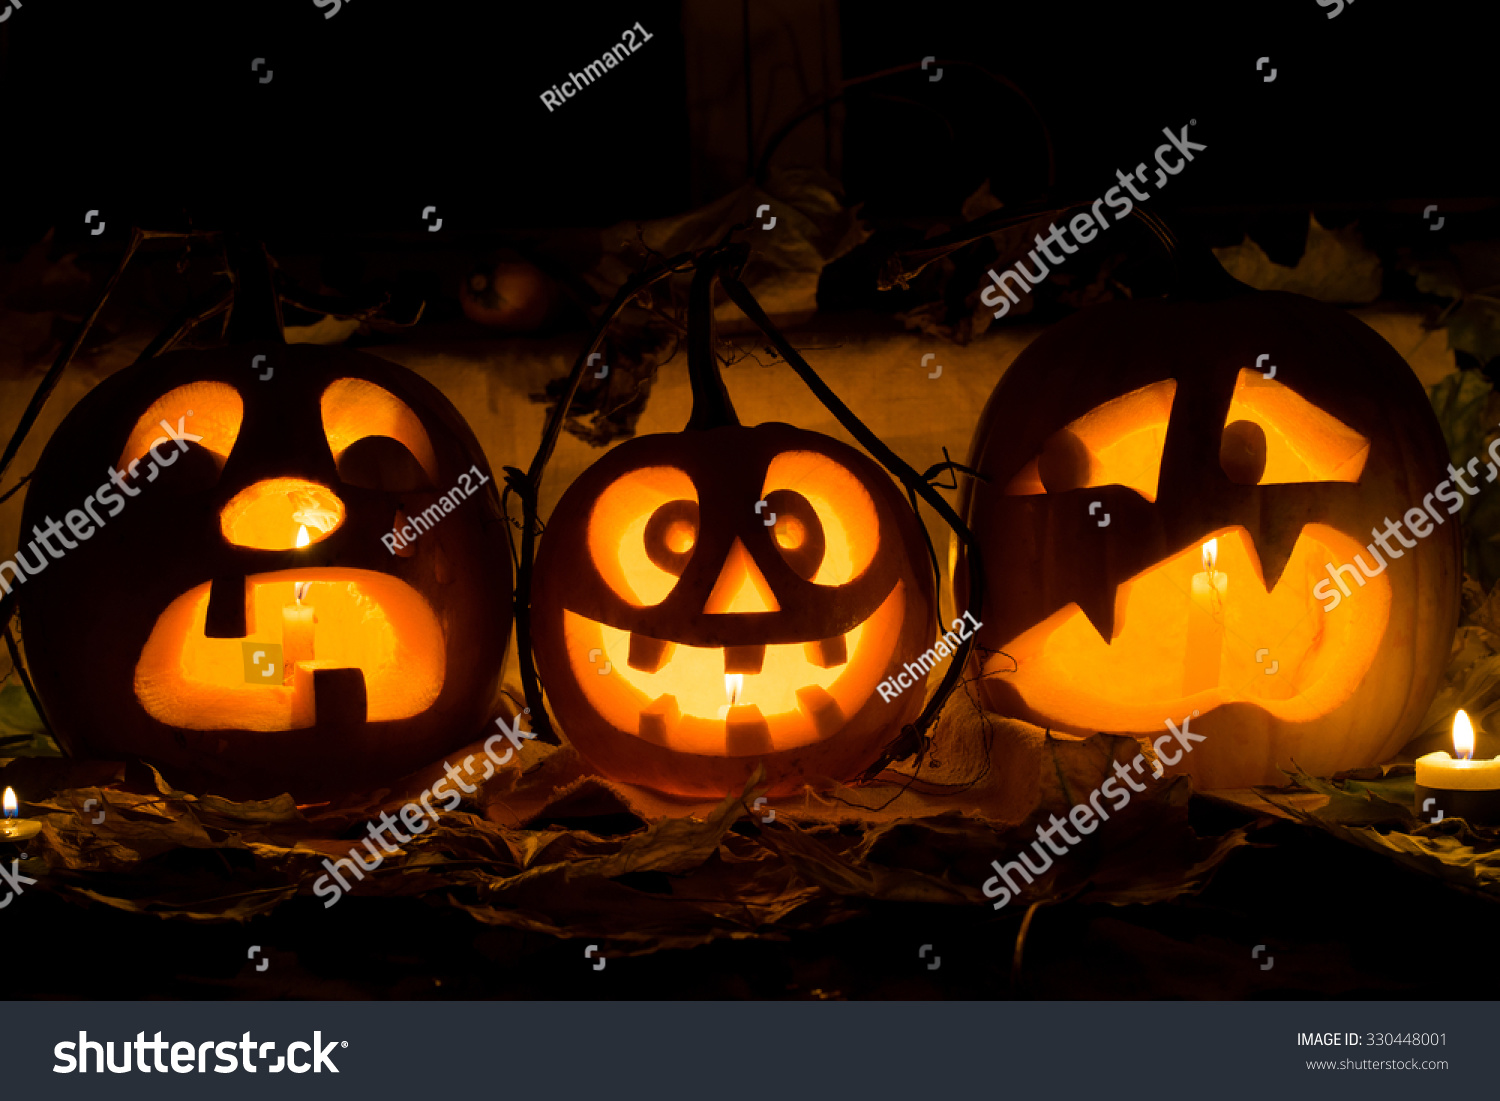 Photo Composition Three Pumpkins On Halloween Stock Photo 330448001 ...